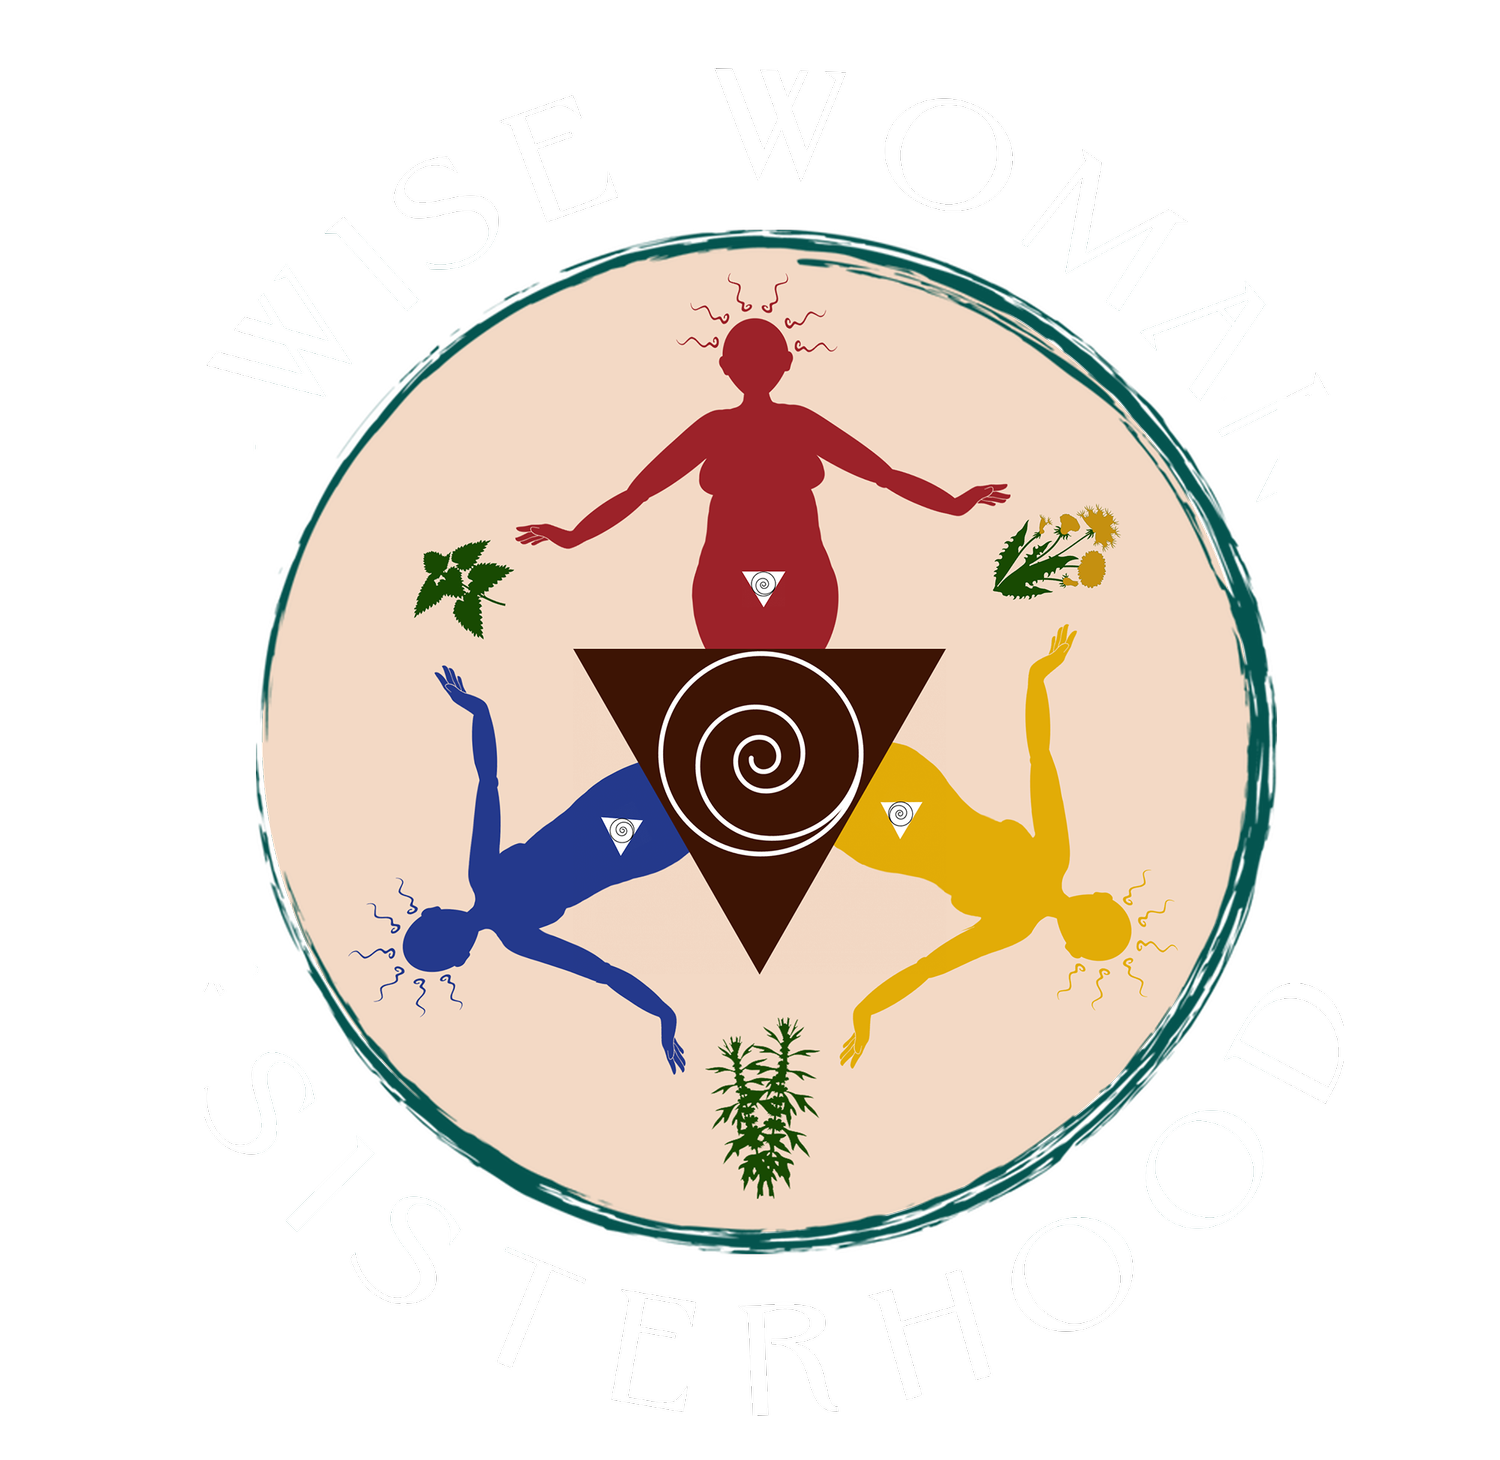 The Wise Woman Sisterhood